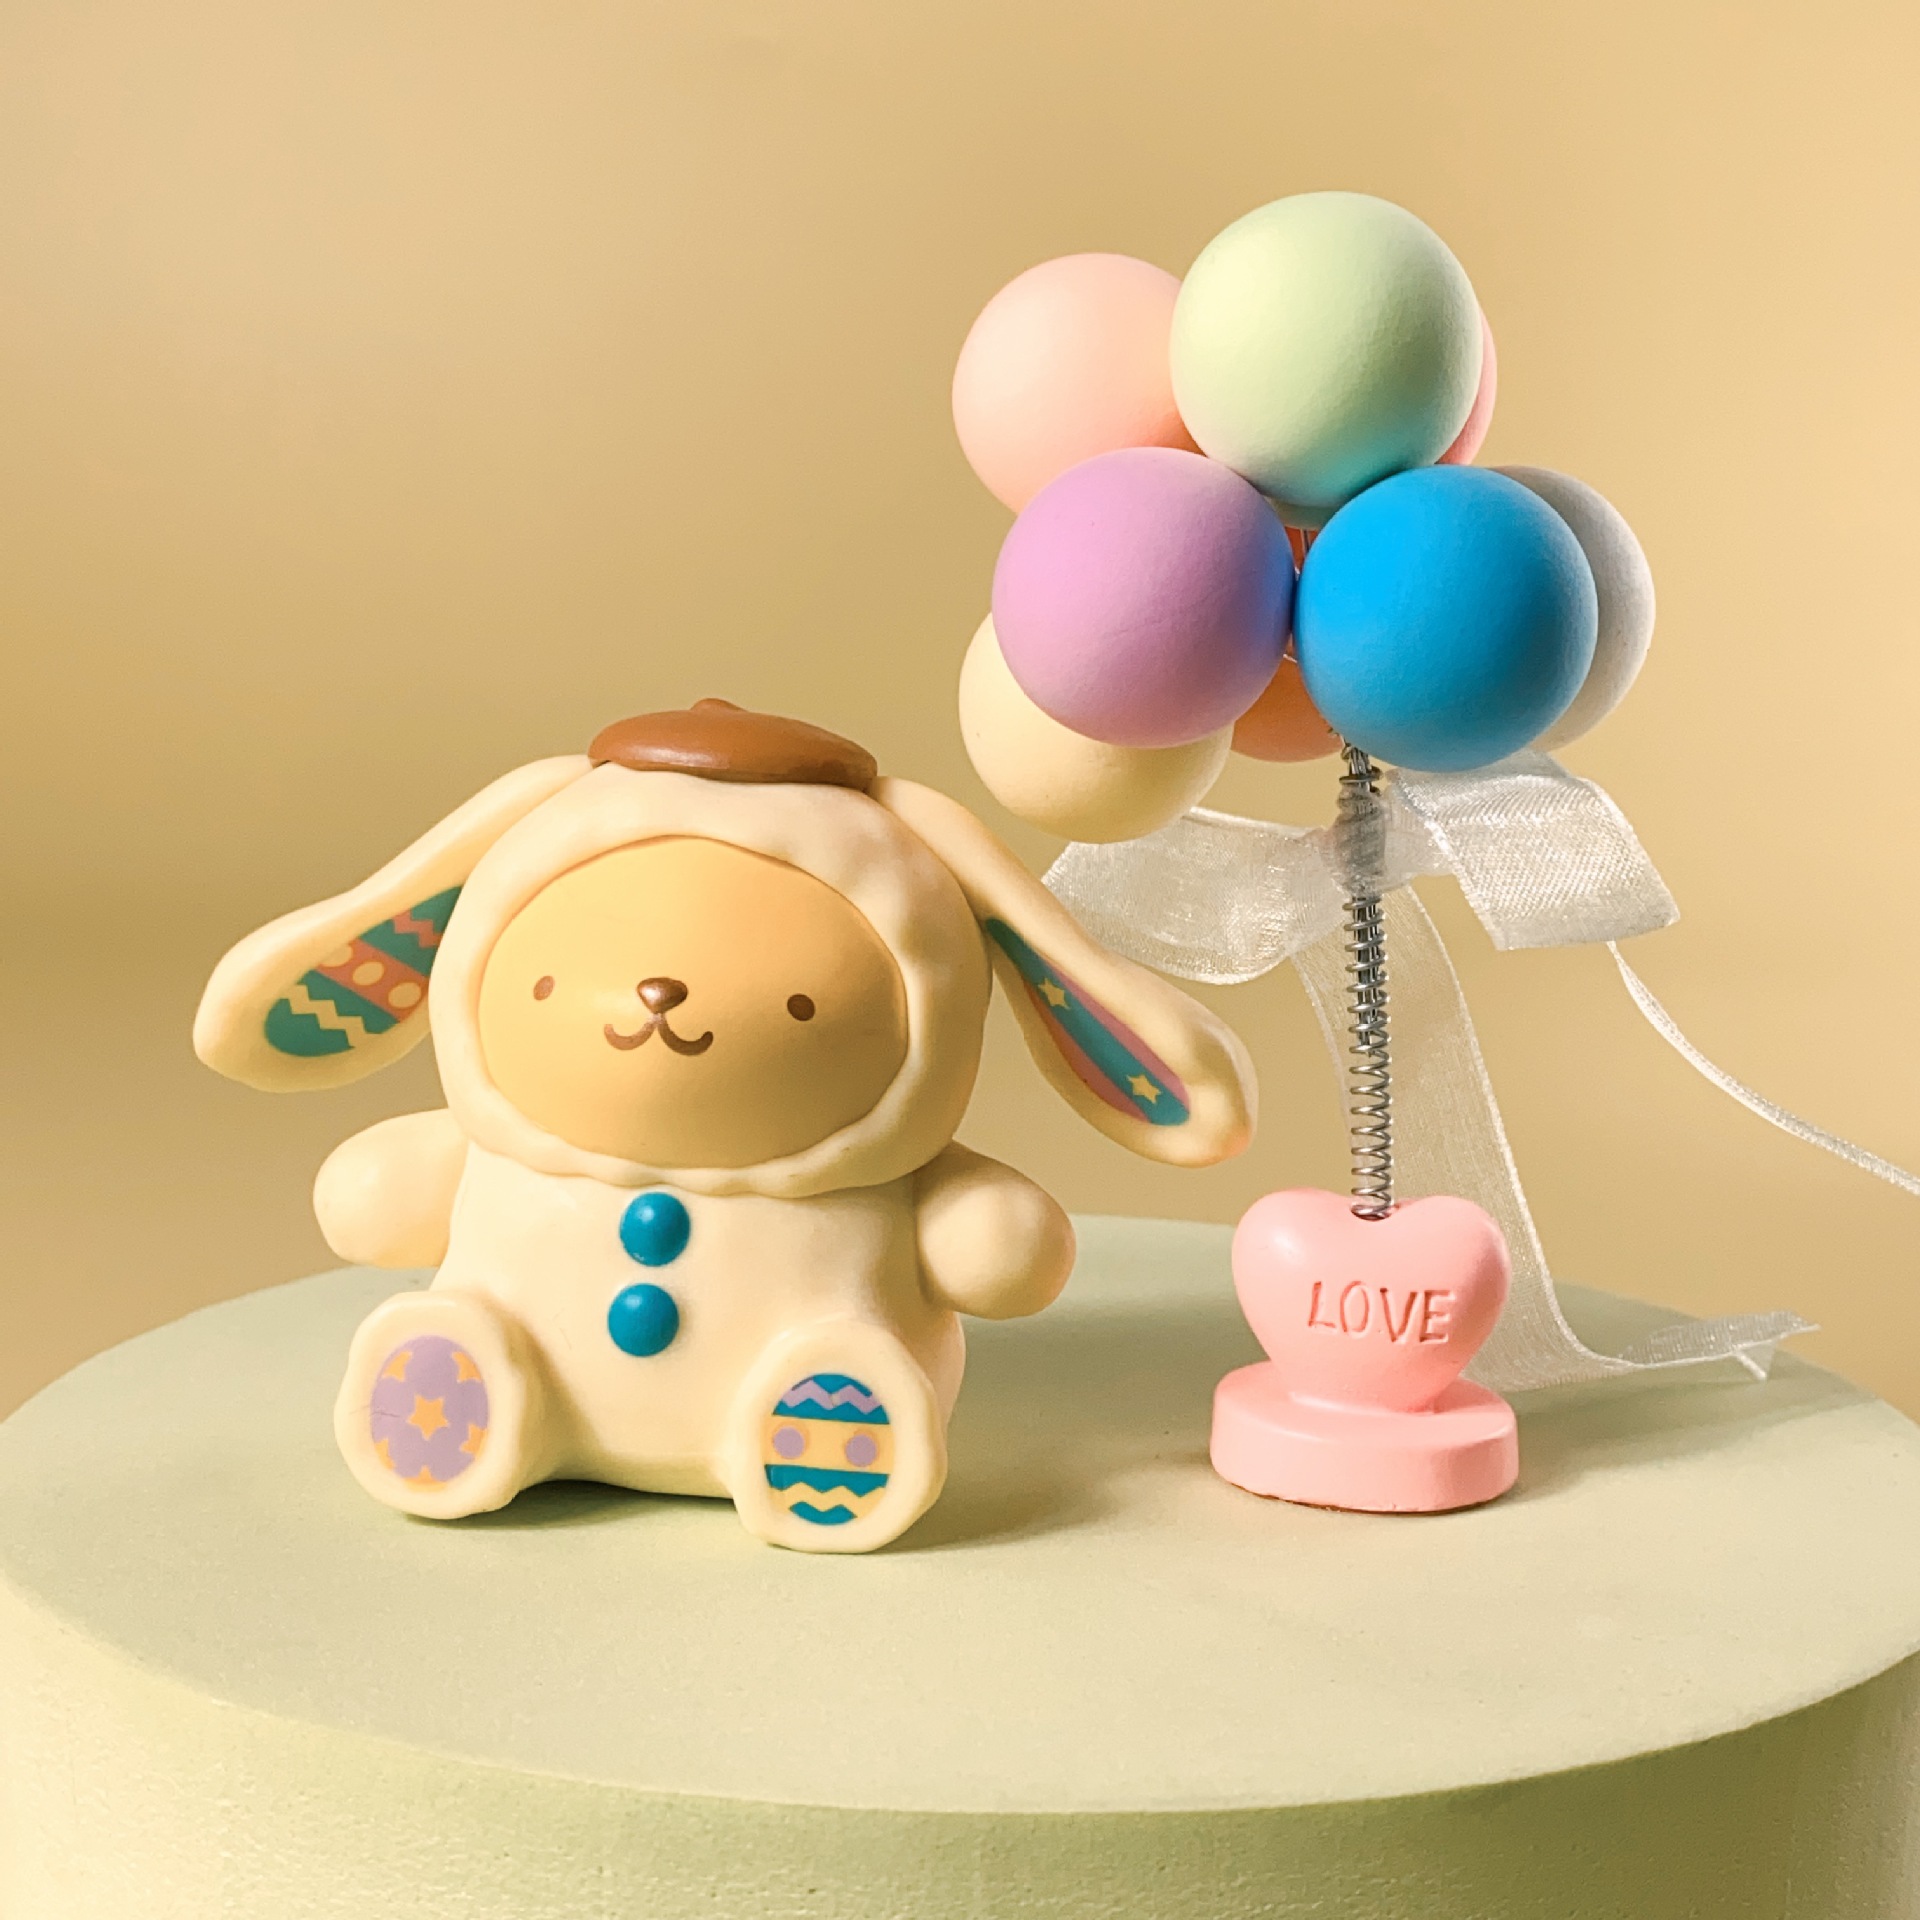 Sanrio 6 Sitting Posture Meilti Hand-Made Clow M Pom Pom Purin Cinnamoroll Babycinnamoroll Capsule Toy Doll Model Ornaments